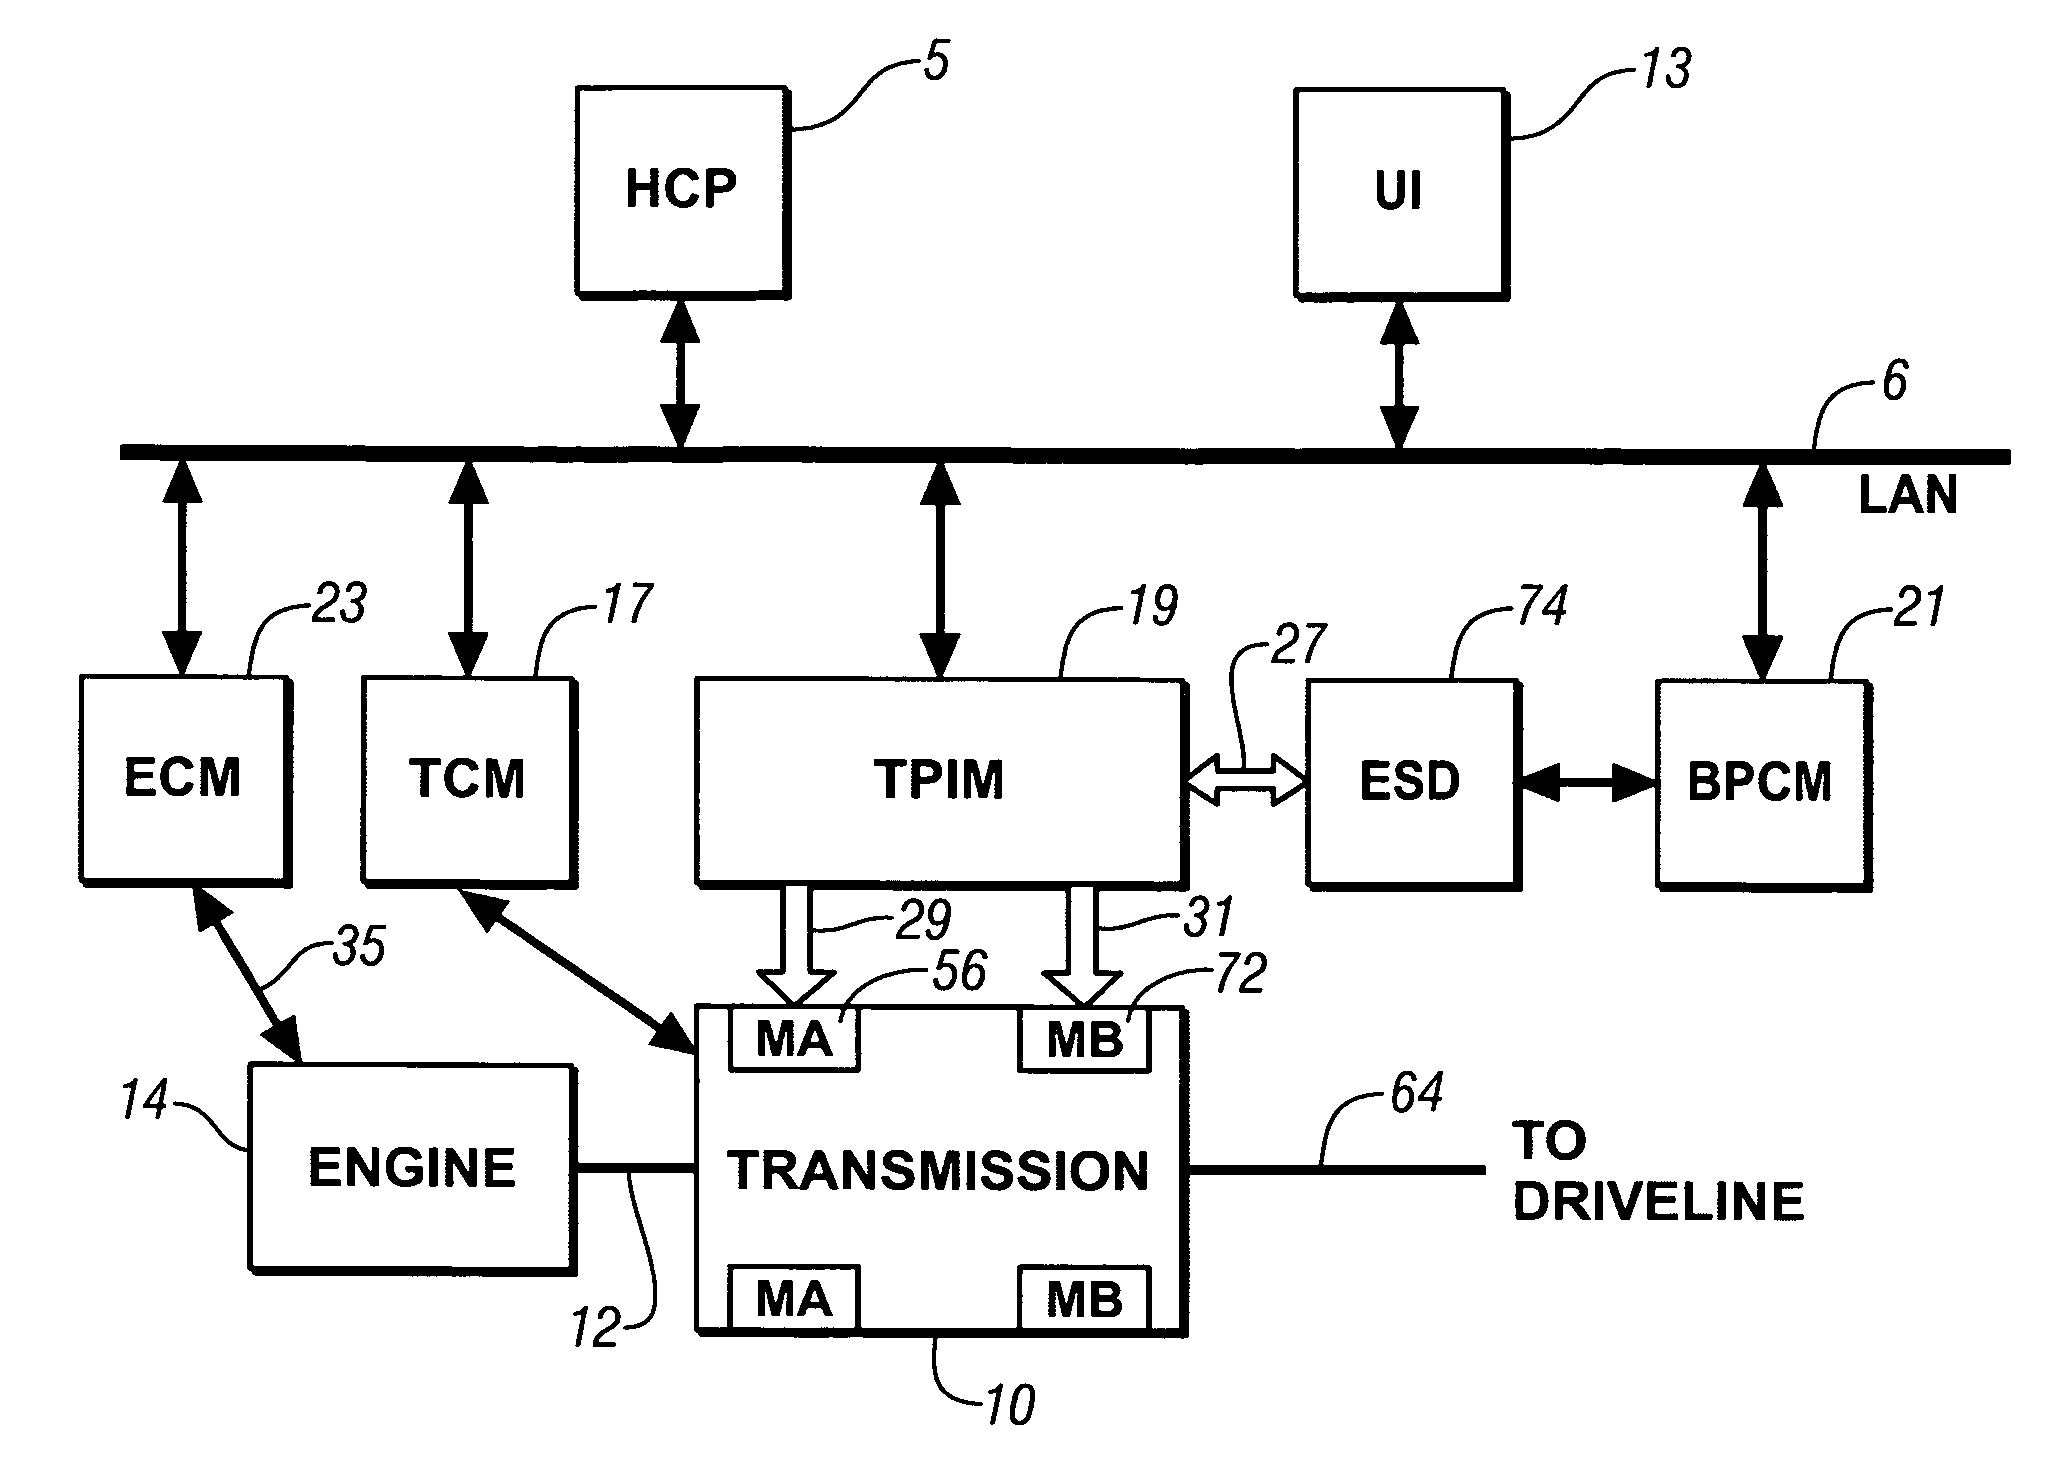 Control system for hybrid powertrain